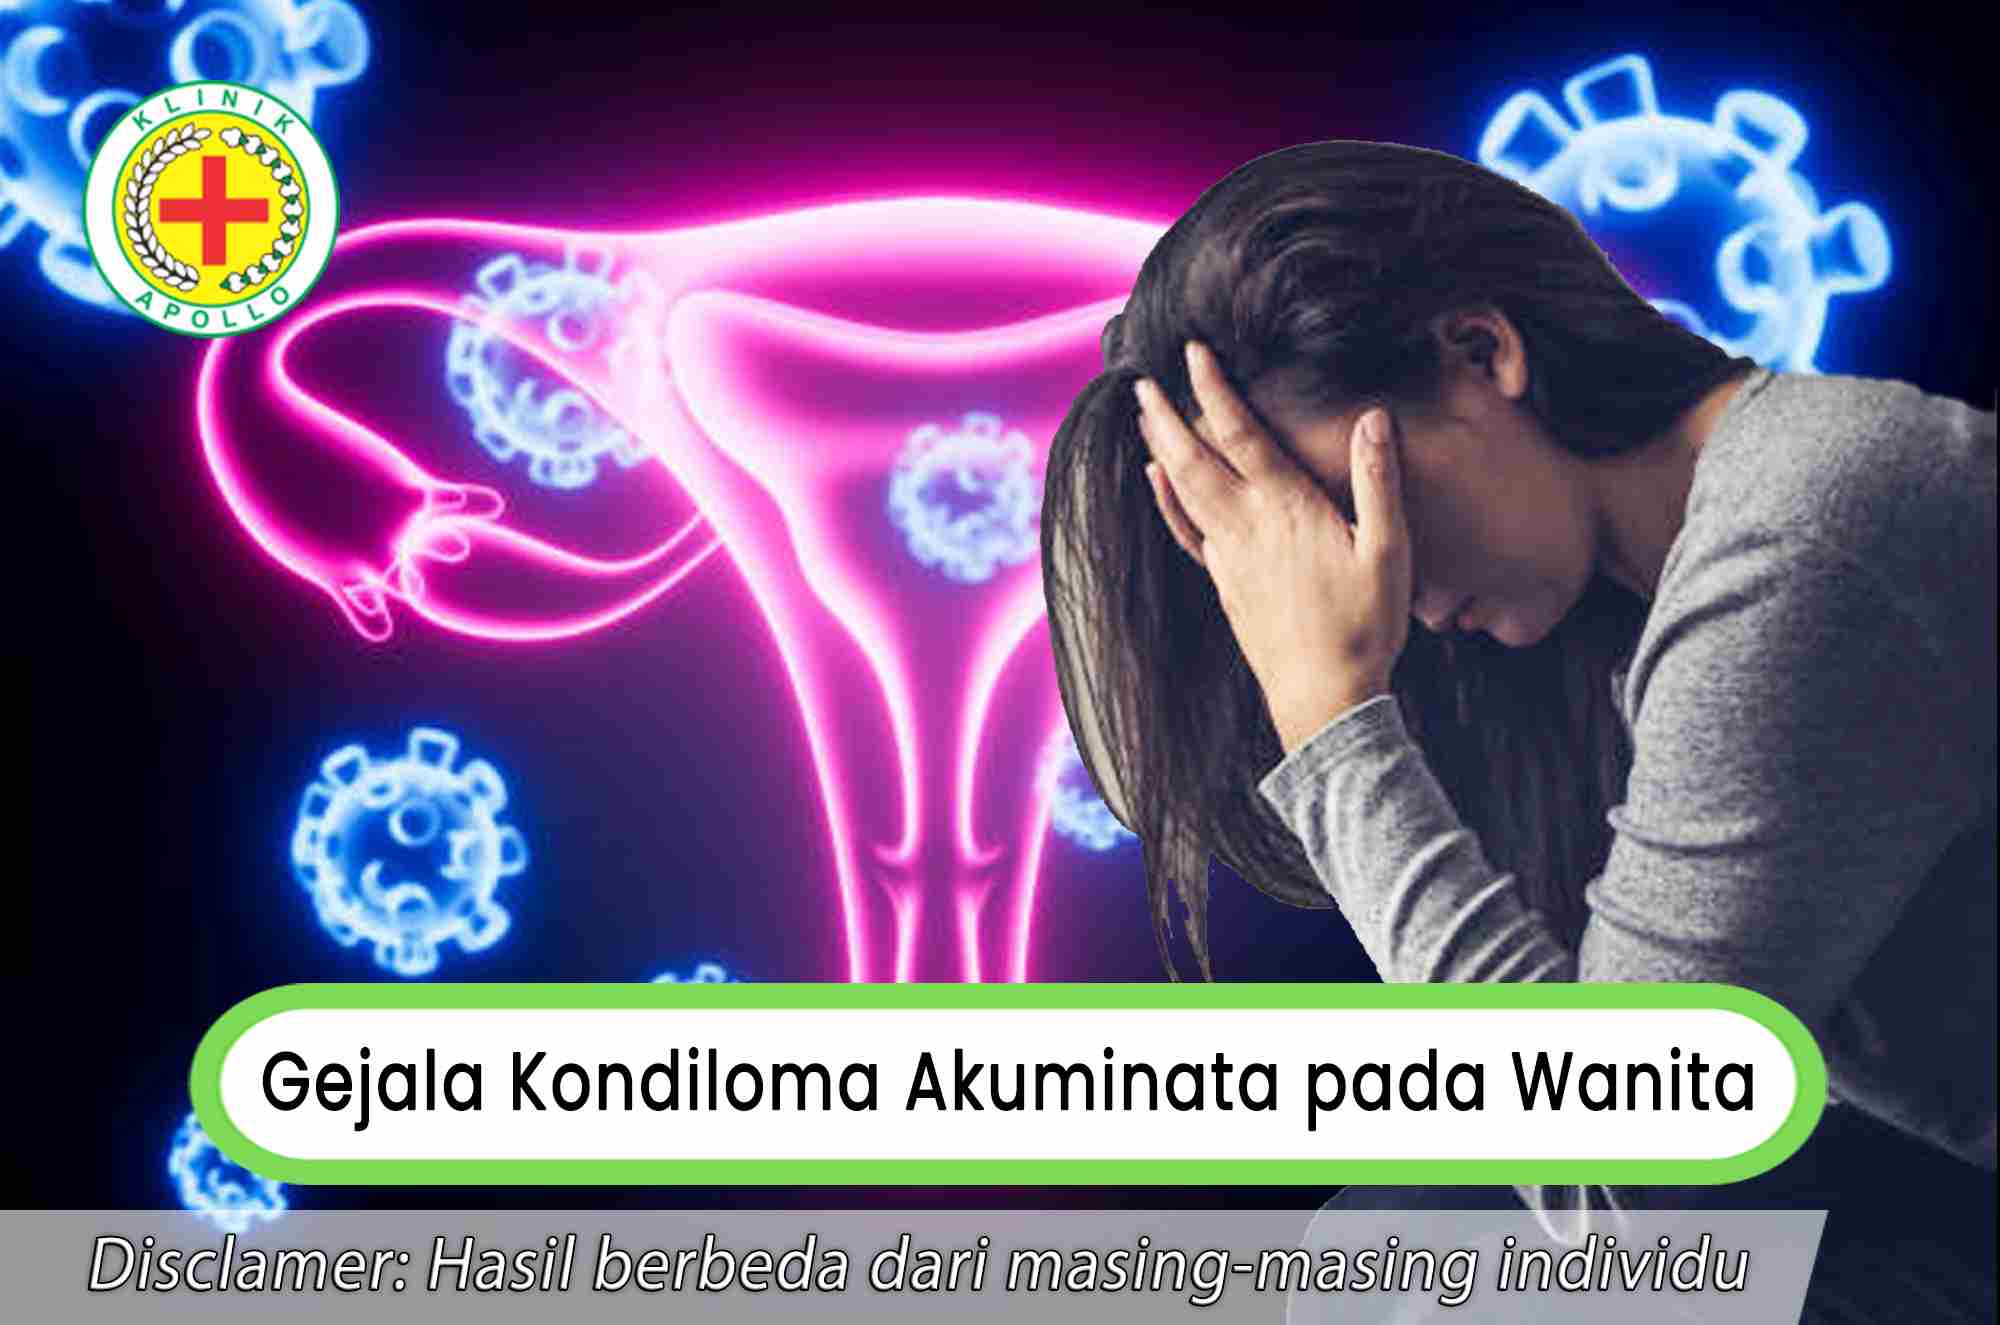 Mengobati gejala kondiloma akuminata pada wanita harus sesuai resep dokter ahli.